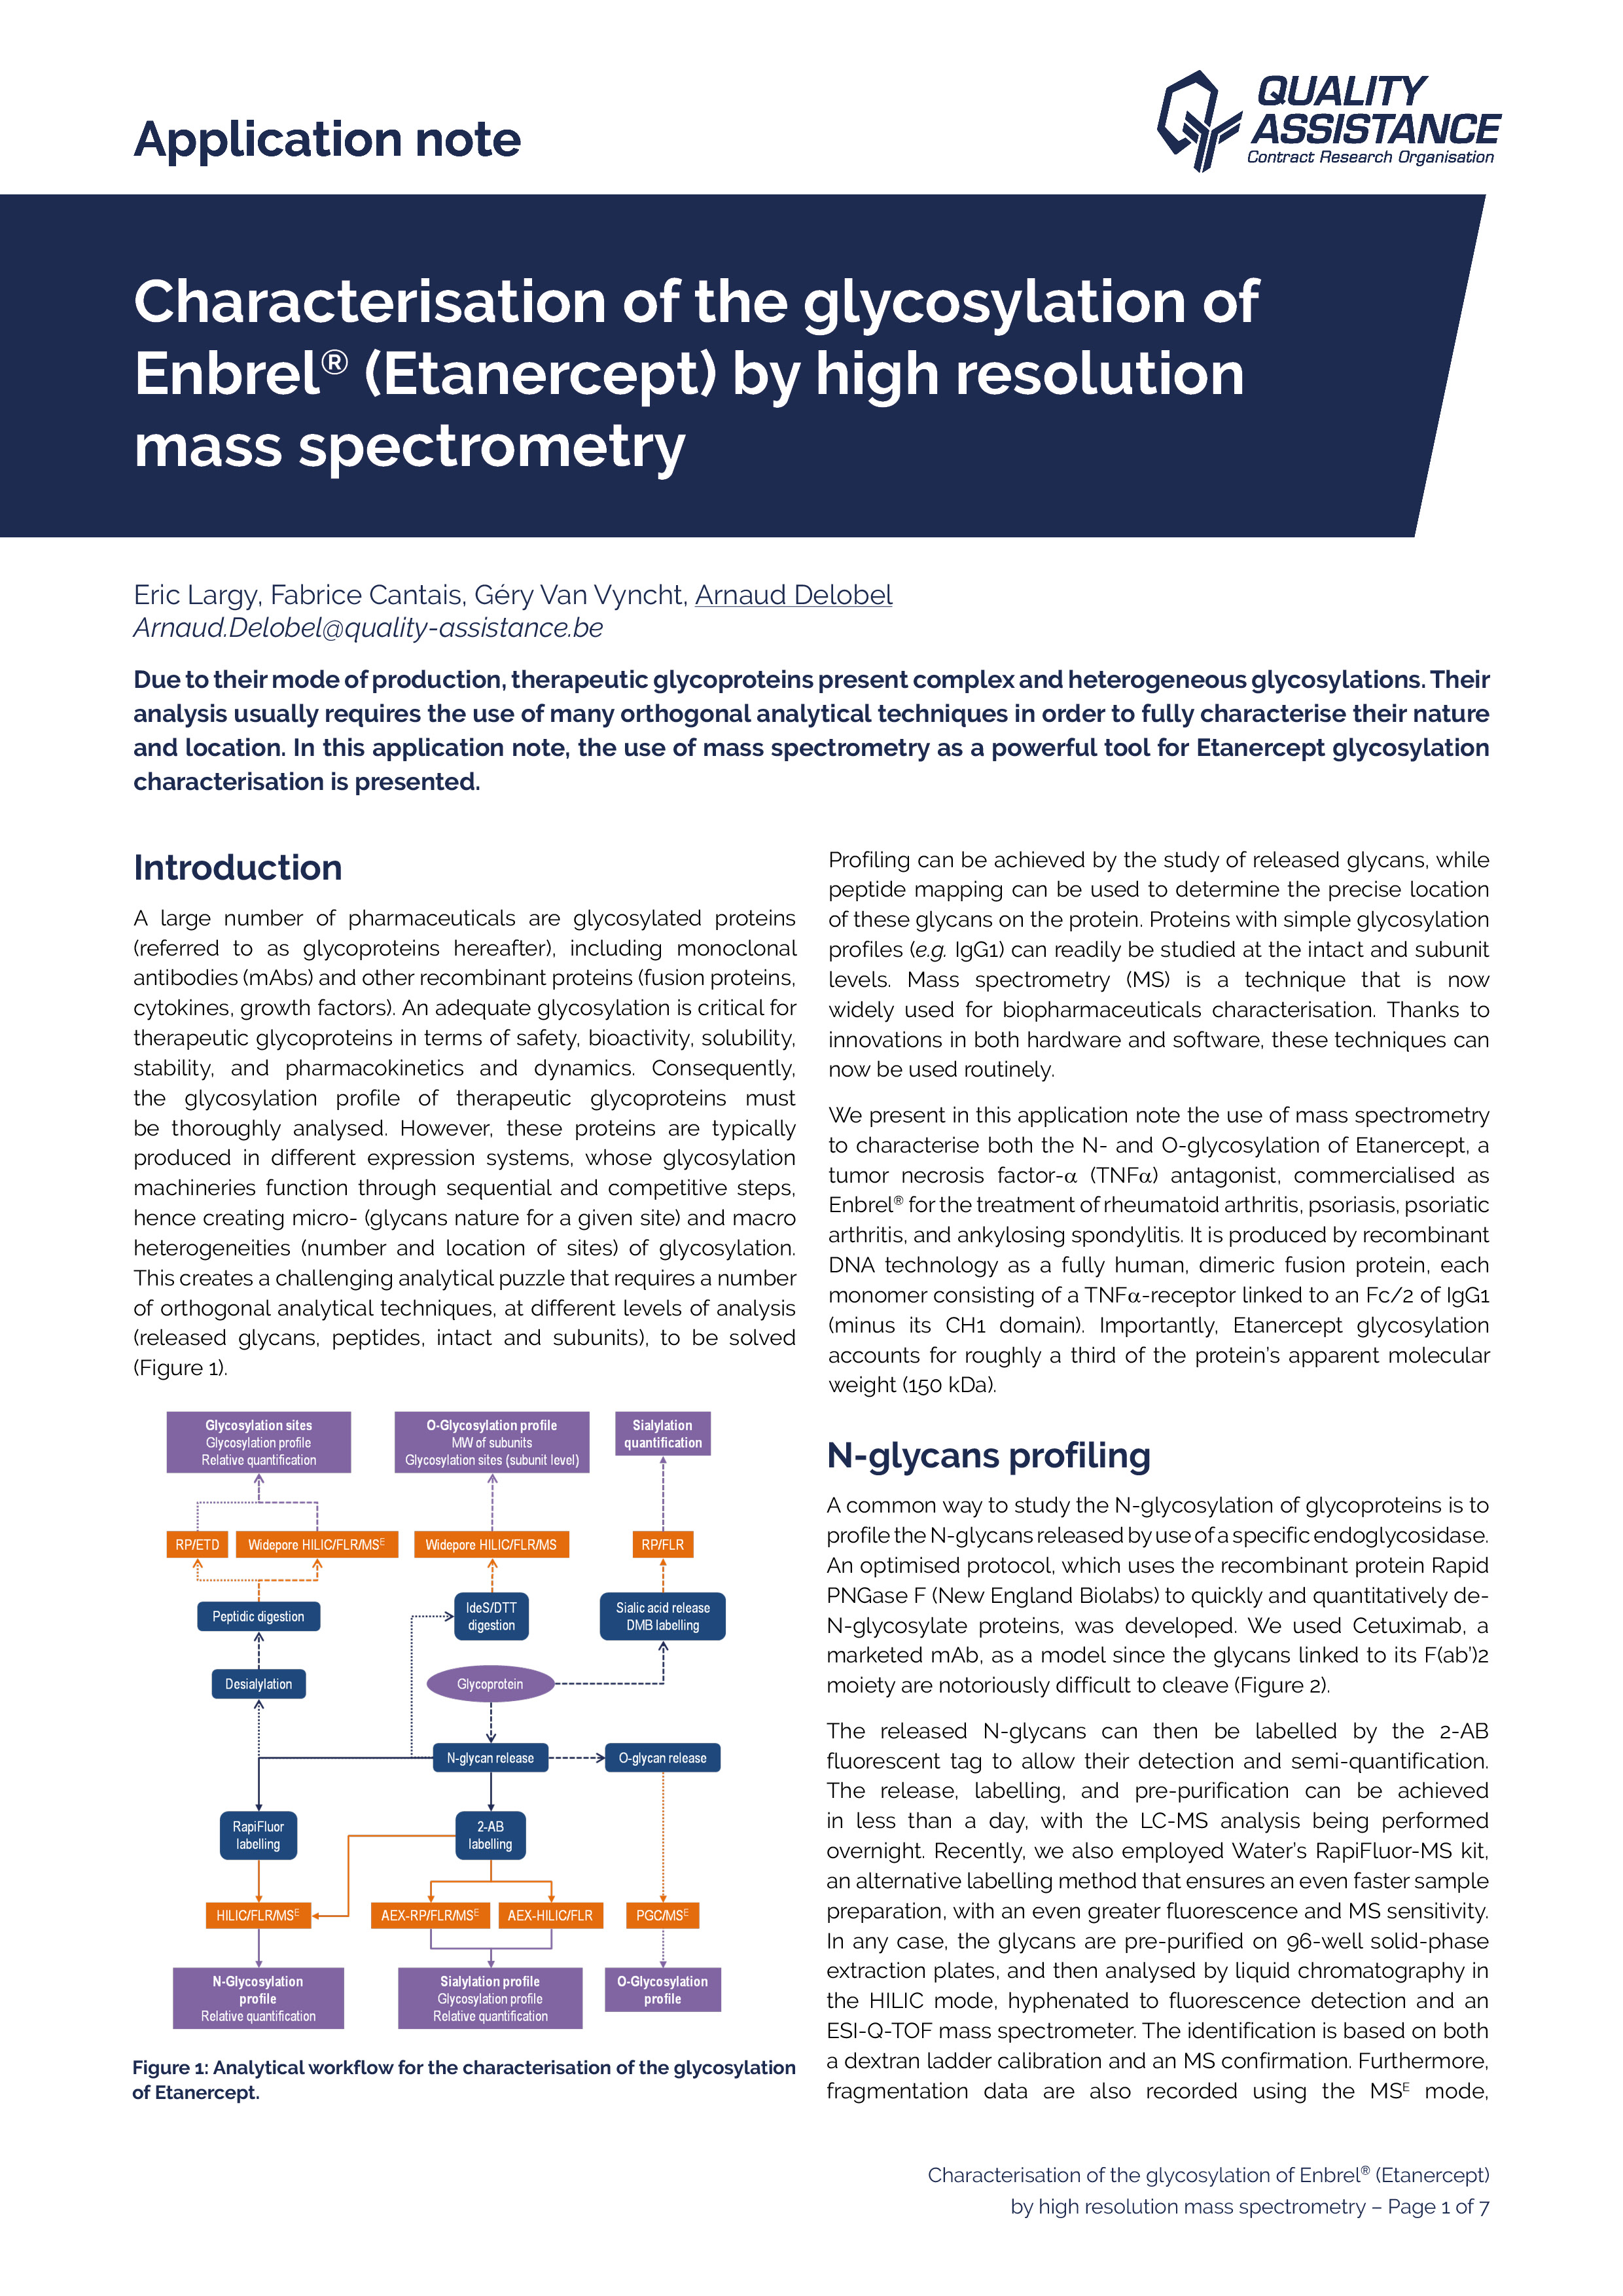 Characterisation of the glycosylation of Enbrel Etanercept by high resolution mass spectrometry